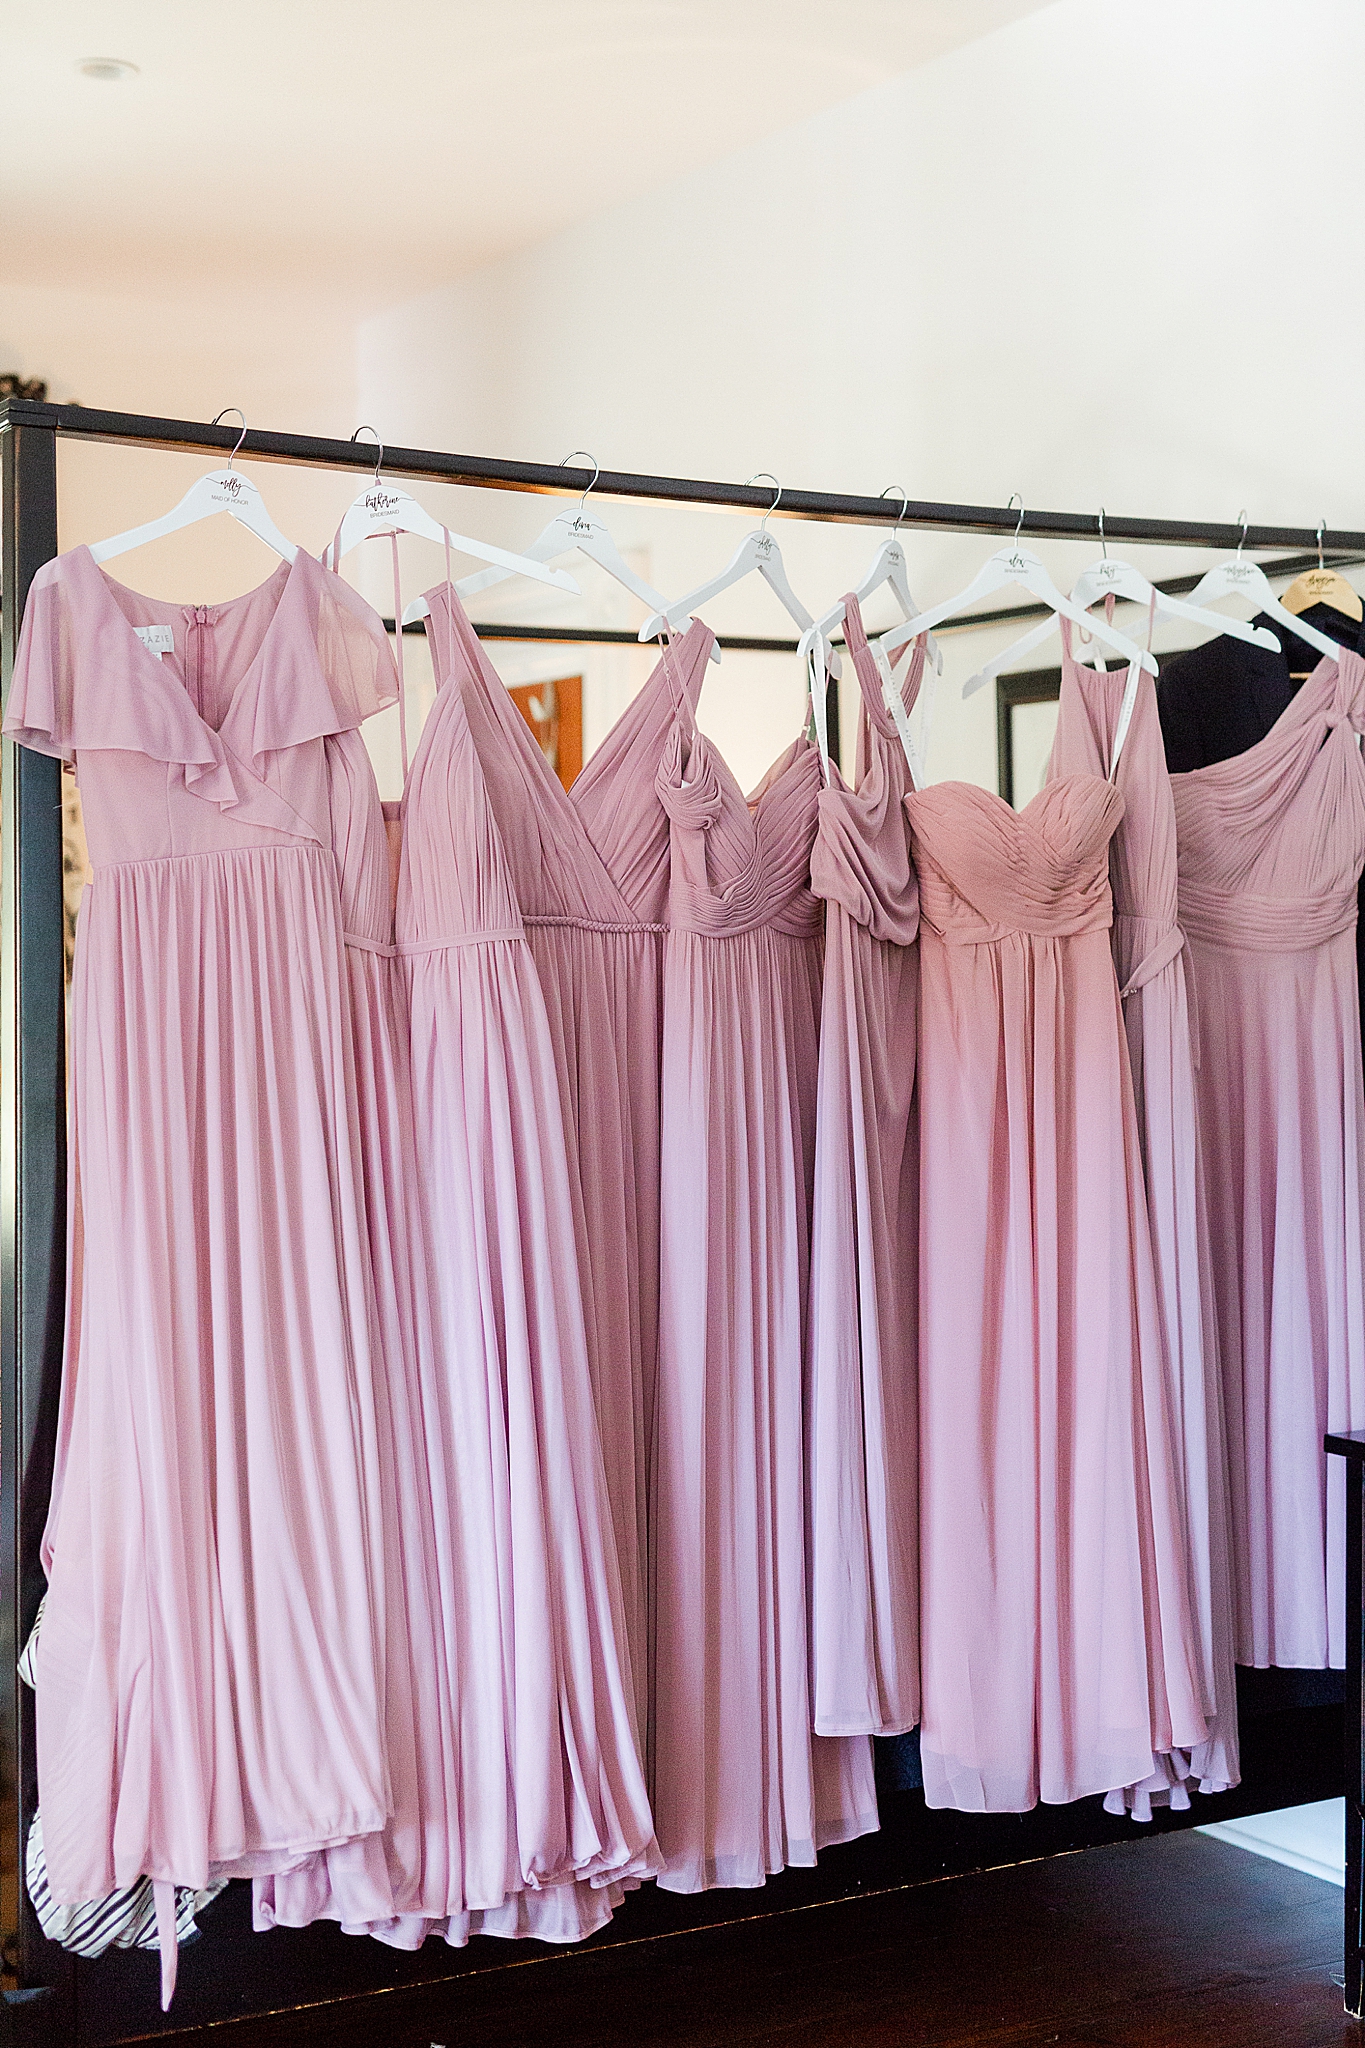 mauve bridesmaid dresses hang in North Carolina